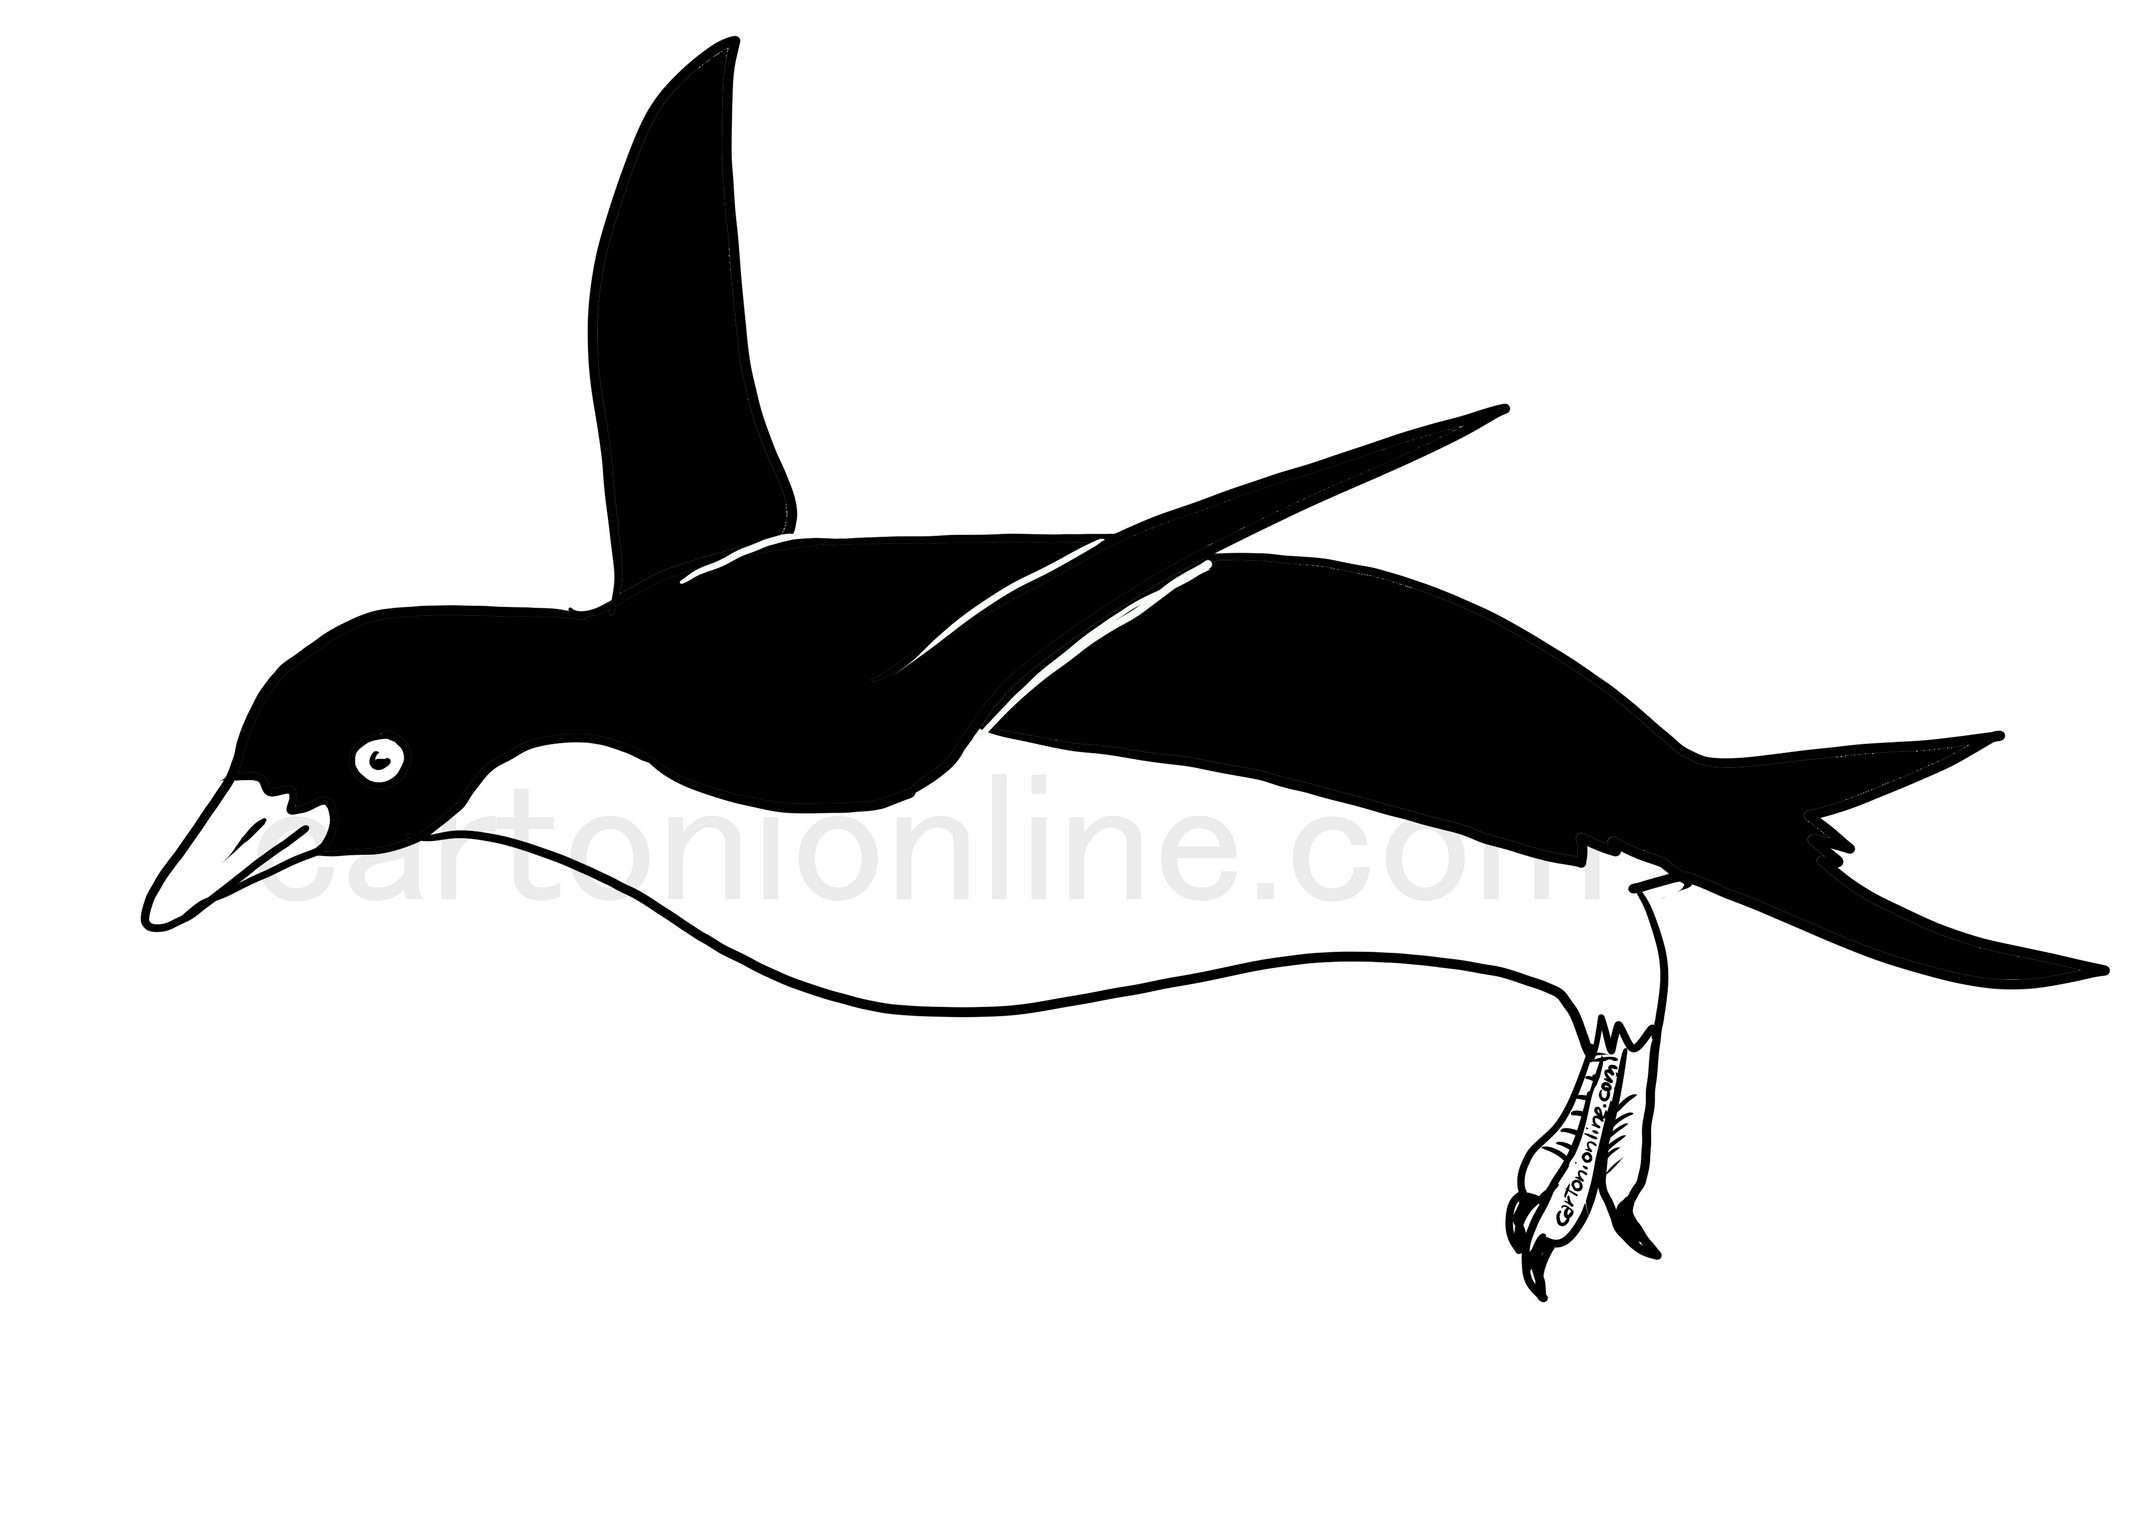 Dibujo de Pingüino realista para colorear